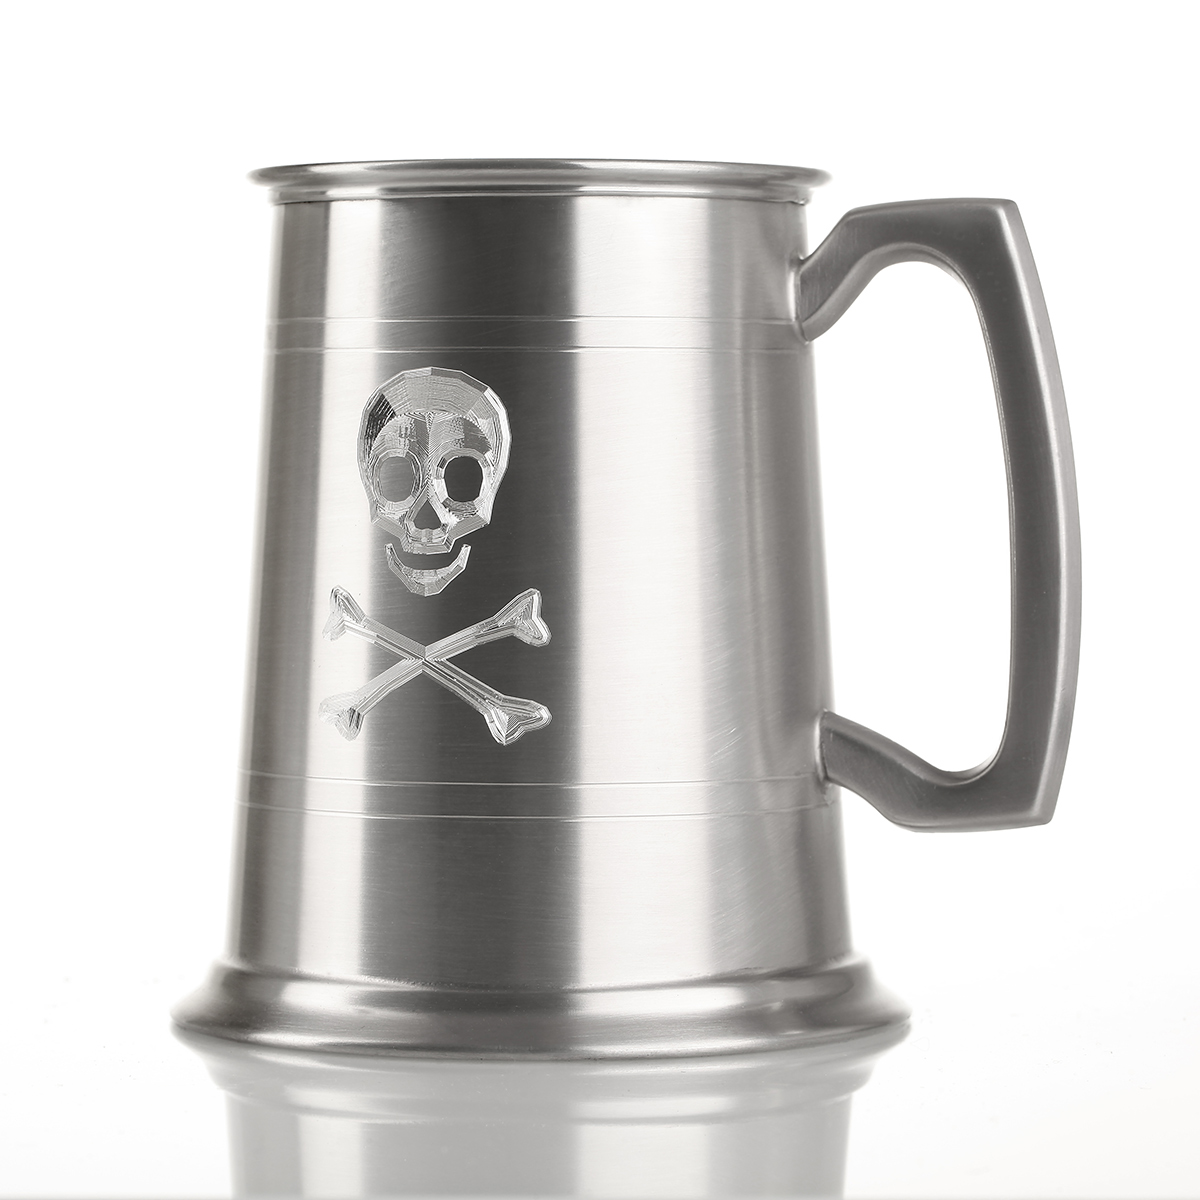 Pirate Skull Tankard - 1 Pint Totenkopf Bierkrug aus England im Mittelalter Stil